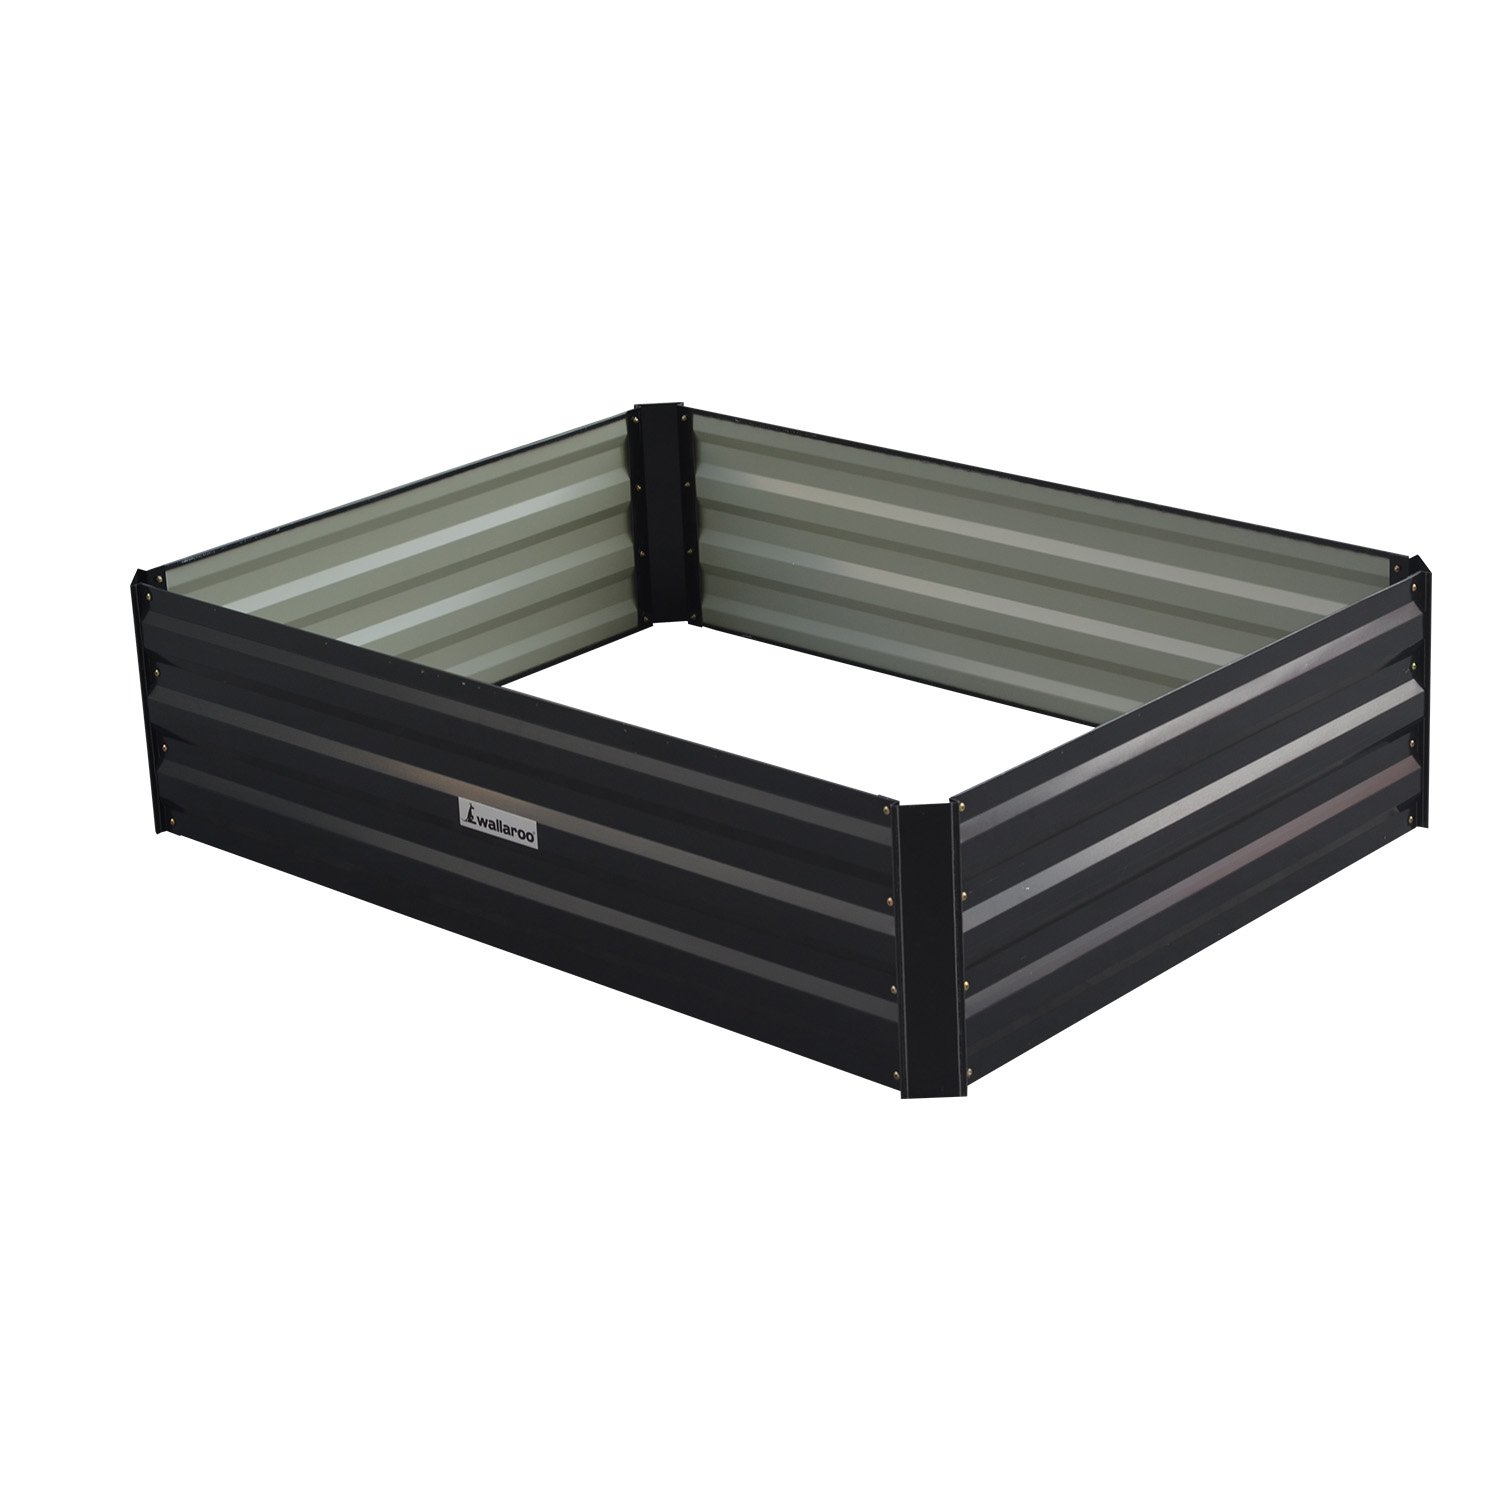 Wallaroo Garden Bed 120 x 90 x 30cm Galvanized Steel - Black 1